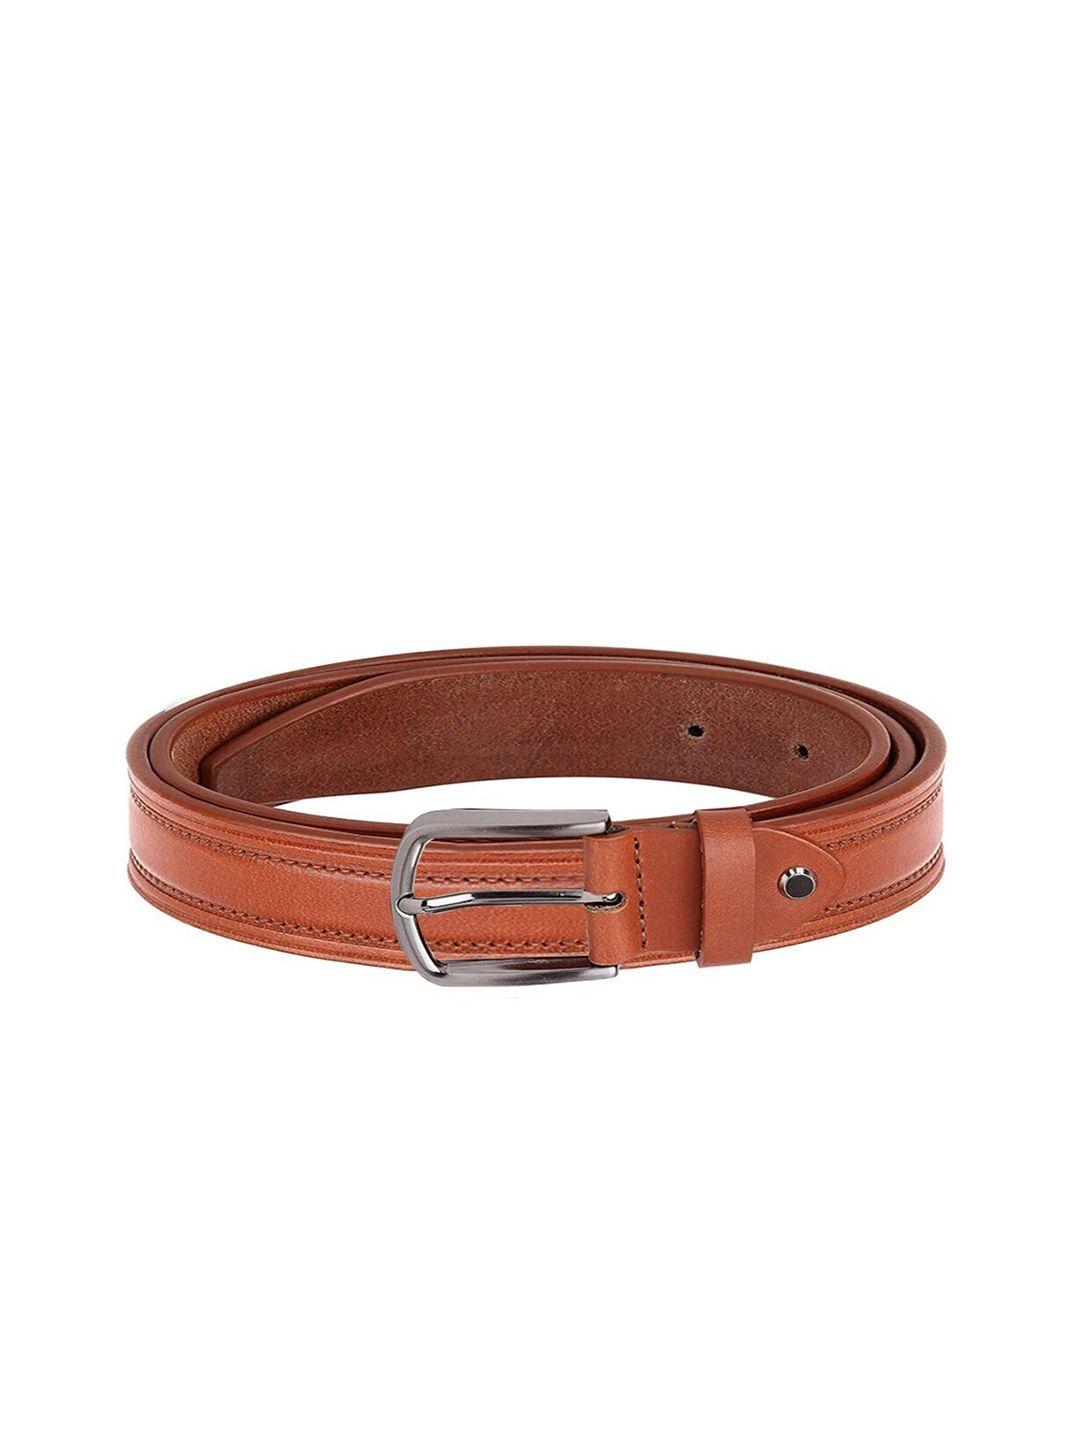 wildhorn men tan brown textured leather belt